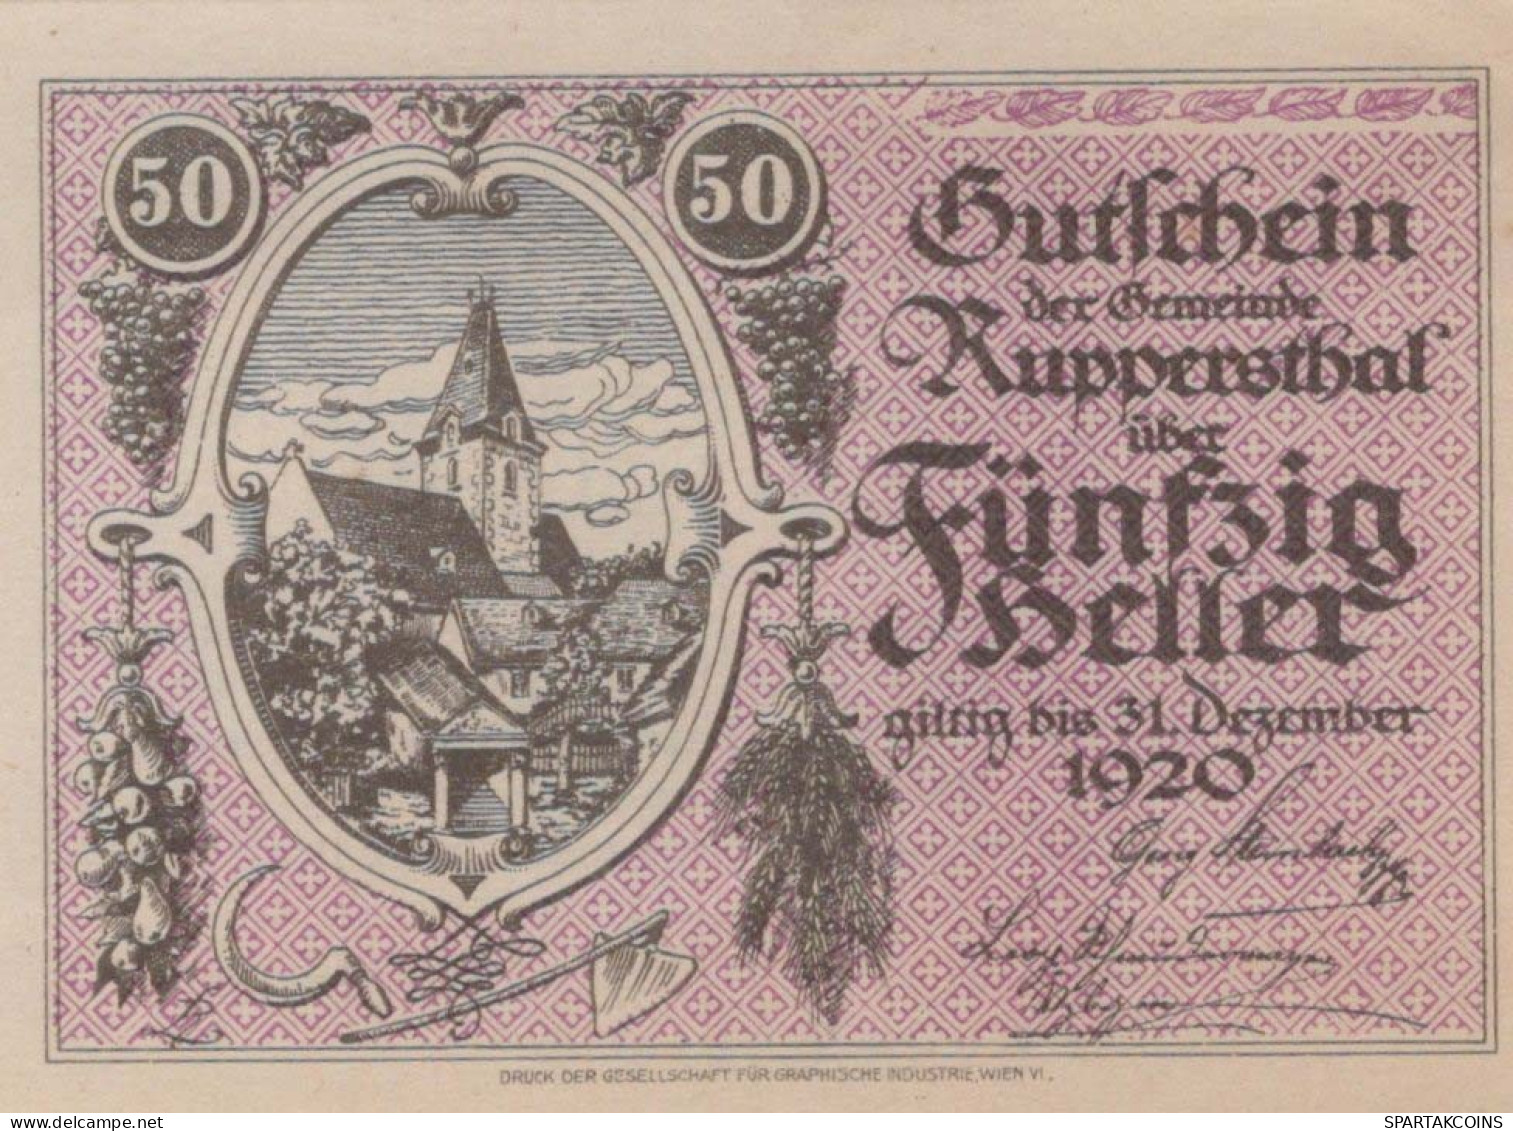 50 HELLER 1920 Stadt ROberenSTHAL Niedrigeren Österreich Notgeld #PJ229 - [11] Local Banknote Issues